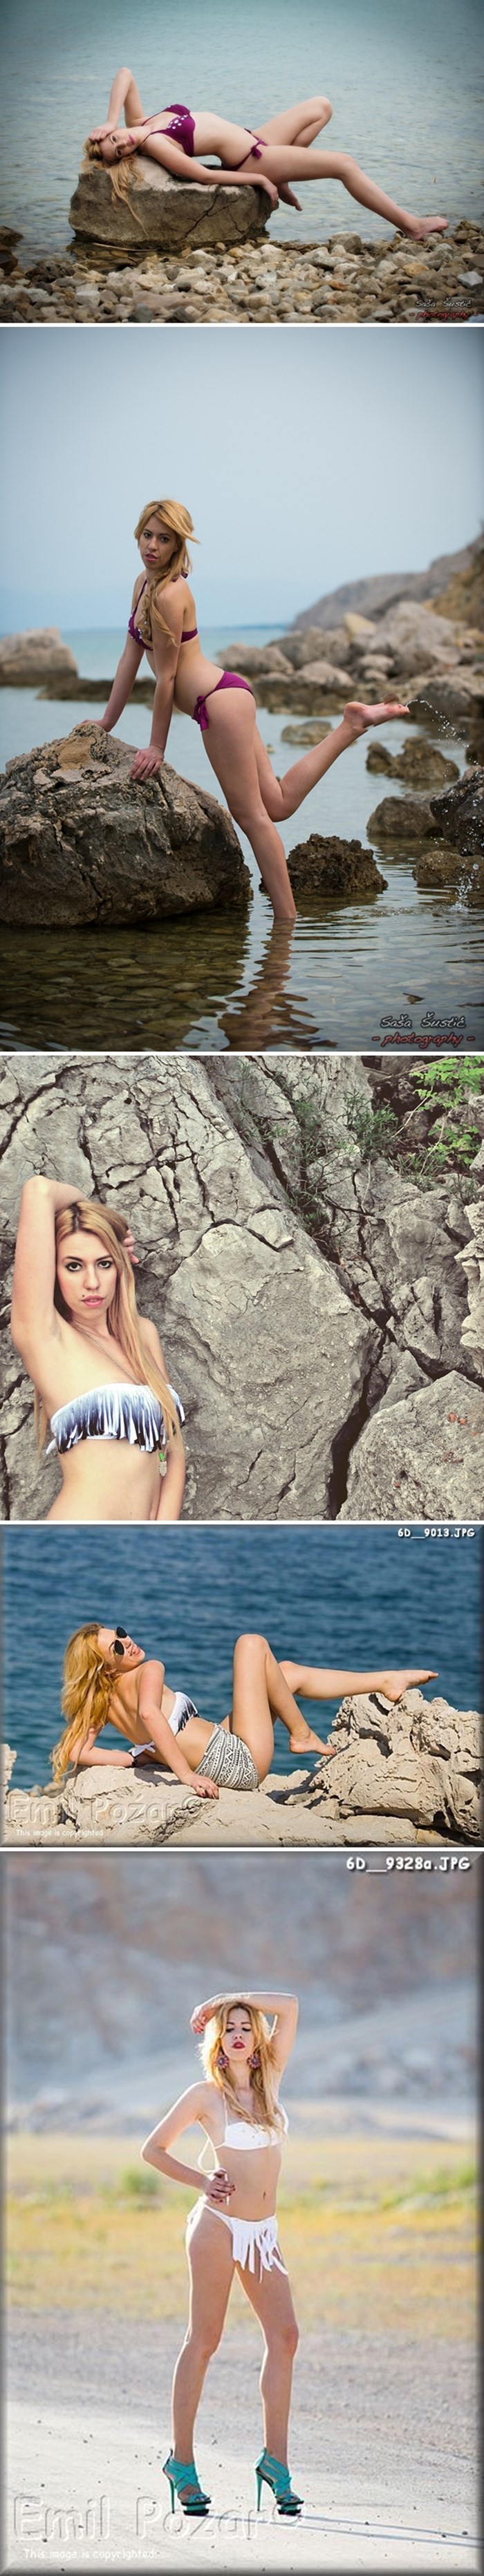 Index Miss bikini 2013: Valentina Vlah